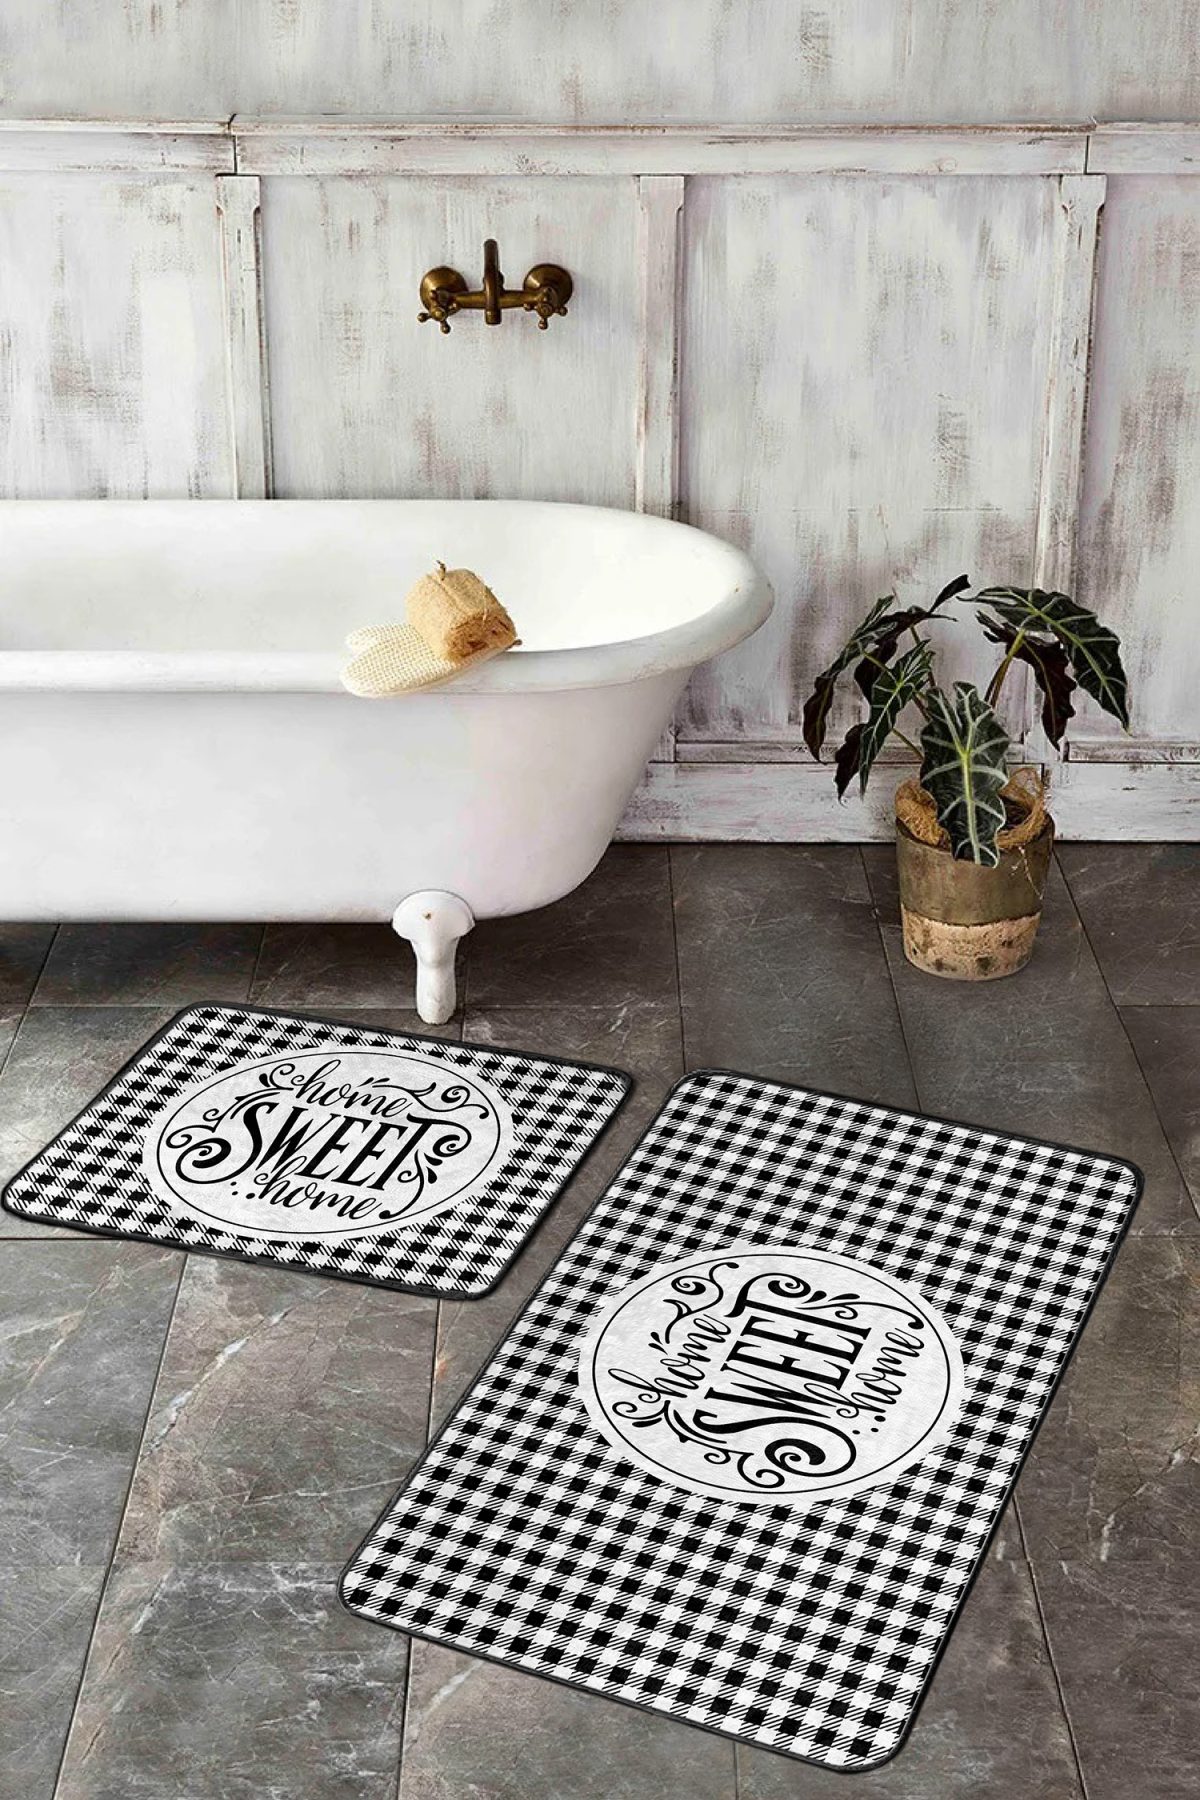 Siyah Beyaz Ekose Home Sweet Temalı 2'li Banyo Paspas Takımı & Mutfak Halısı Realhomes